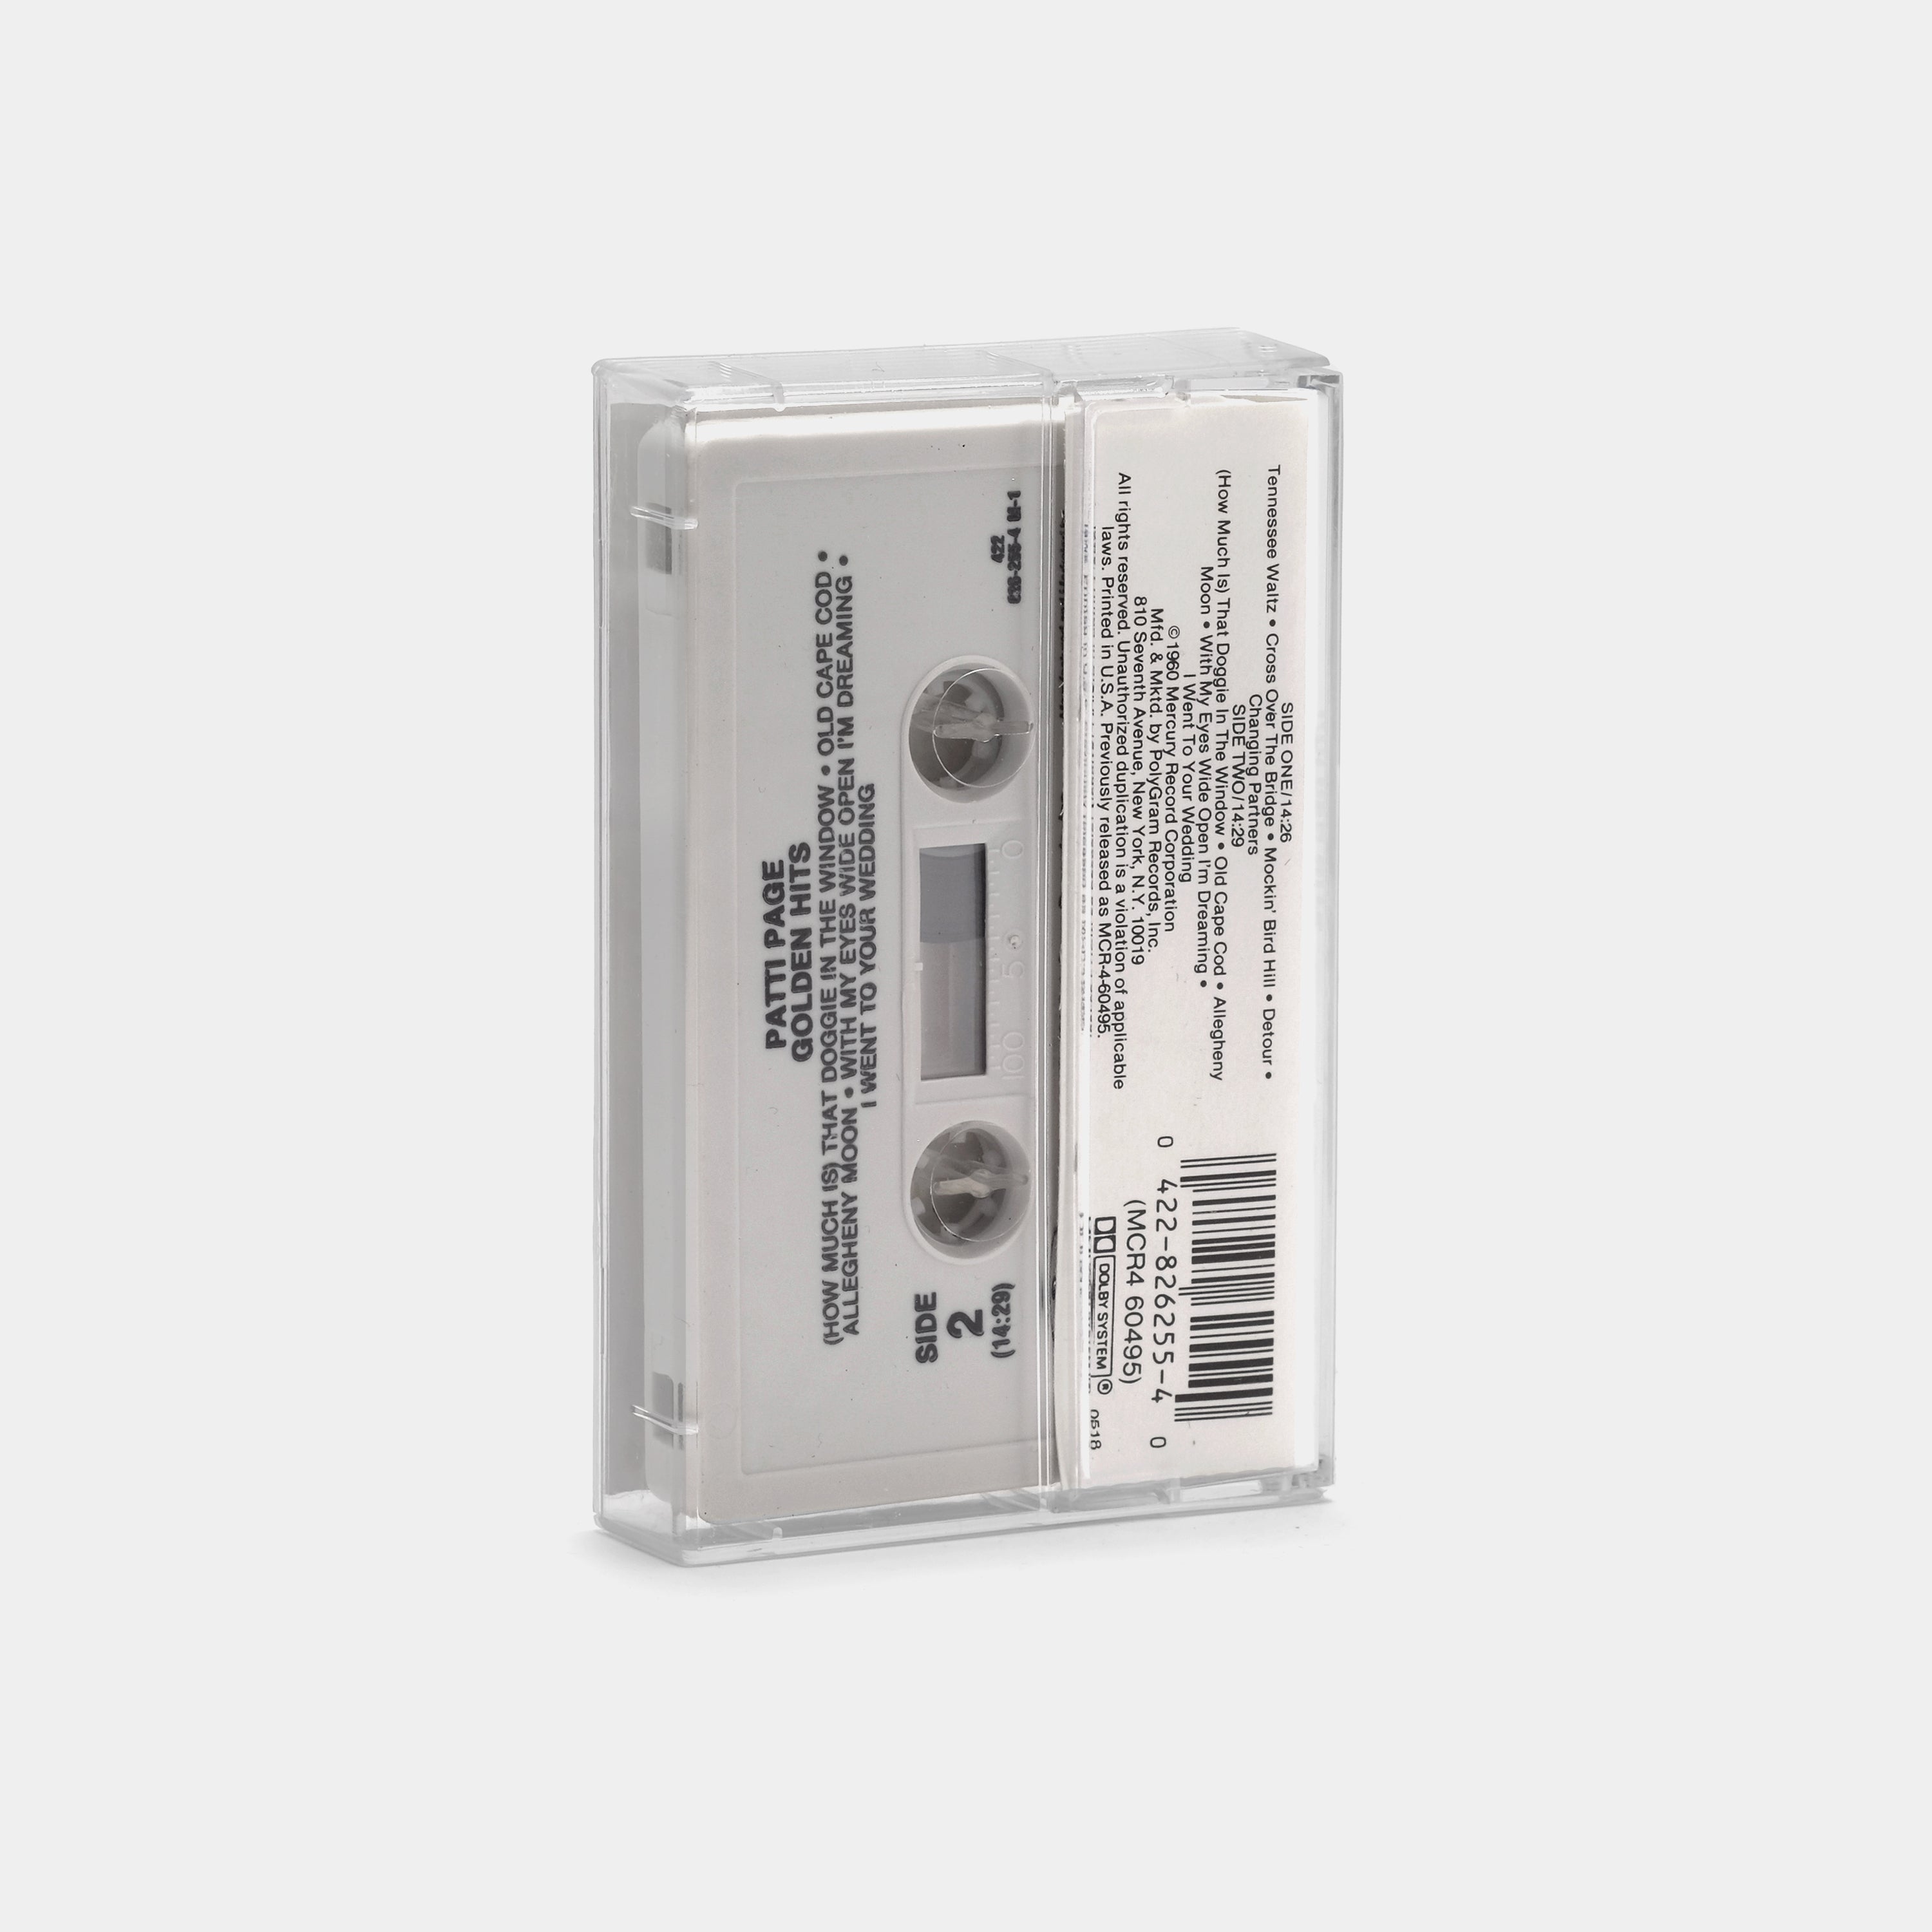 Patti Page - Golden Hits Cassette Tape